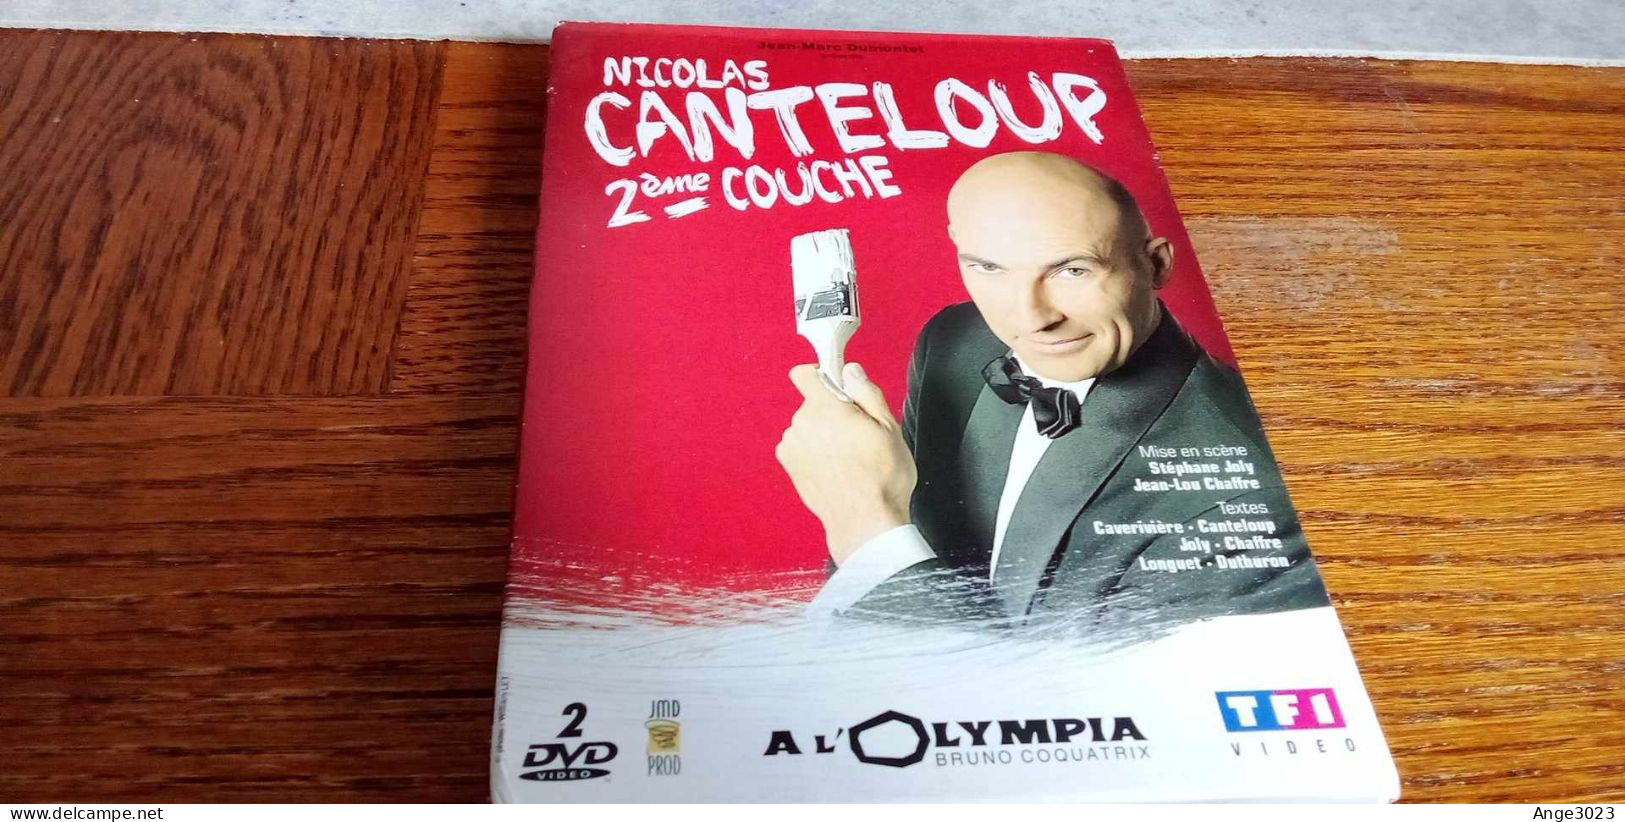 NICOLAS CANTELOUP "2eme Couche" - Concert & Music